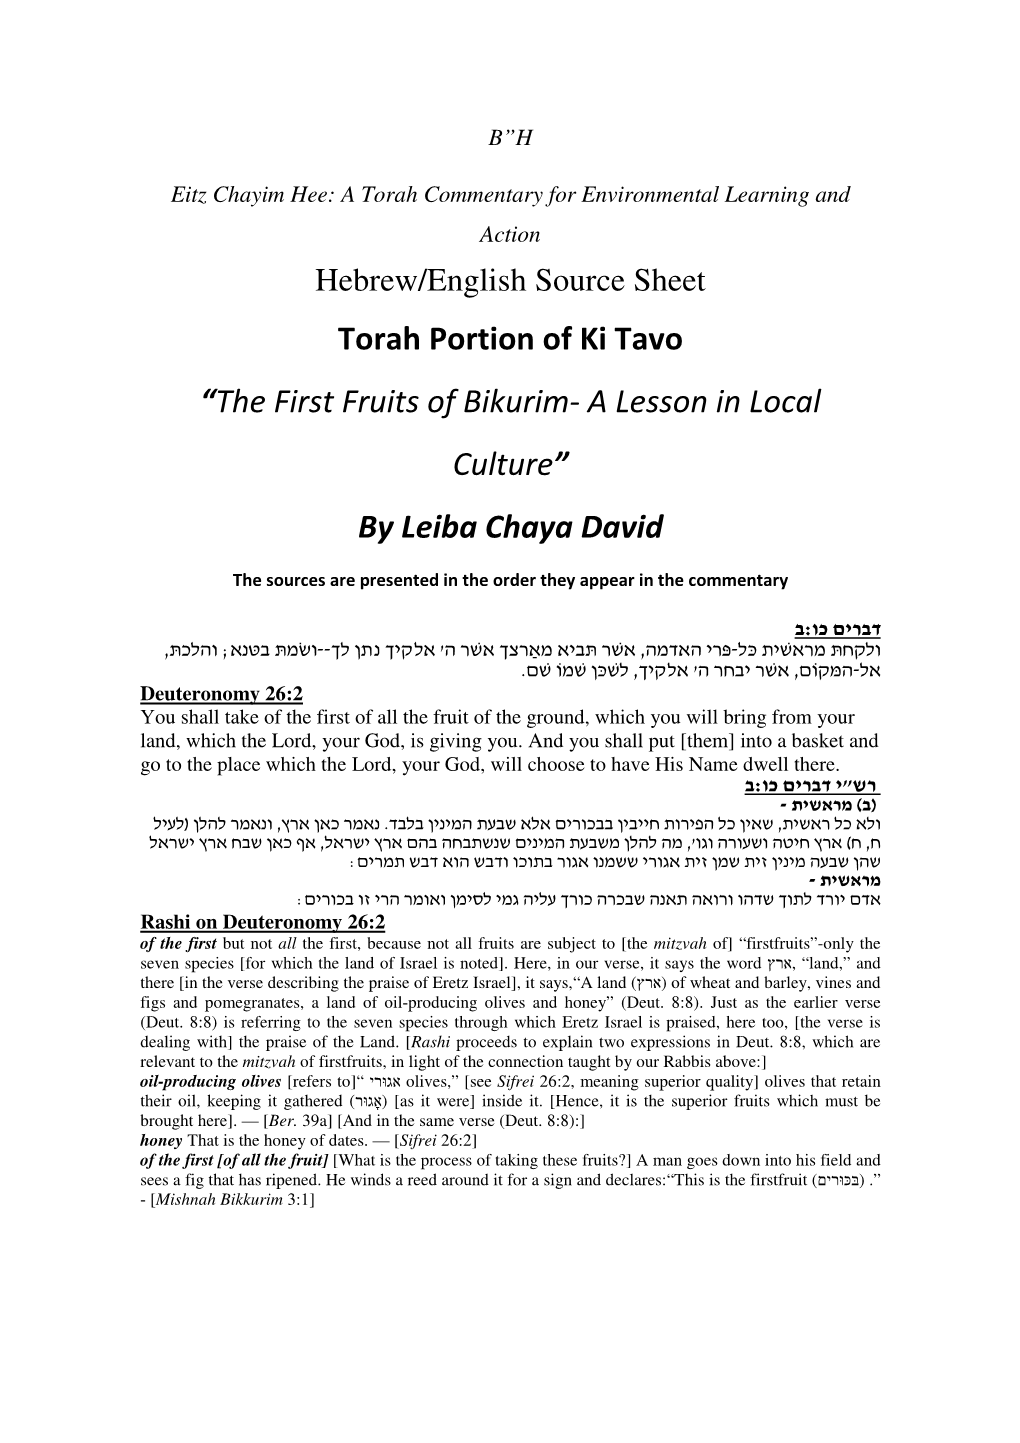 Torah Portion of Ki Tavo “The First Fruits of Bikurim- a Lesson in Local Culture ” by Leiba Chaya David